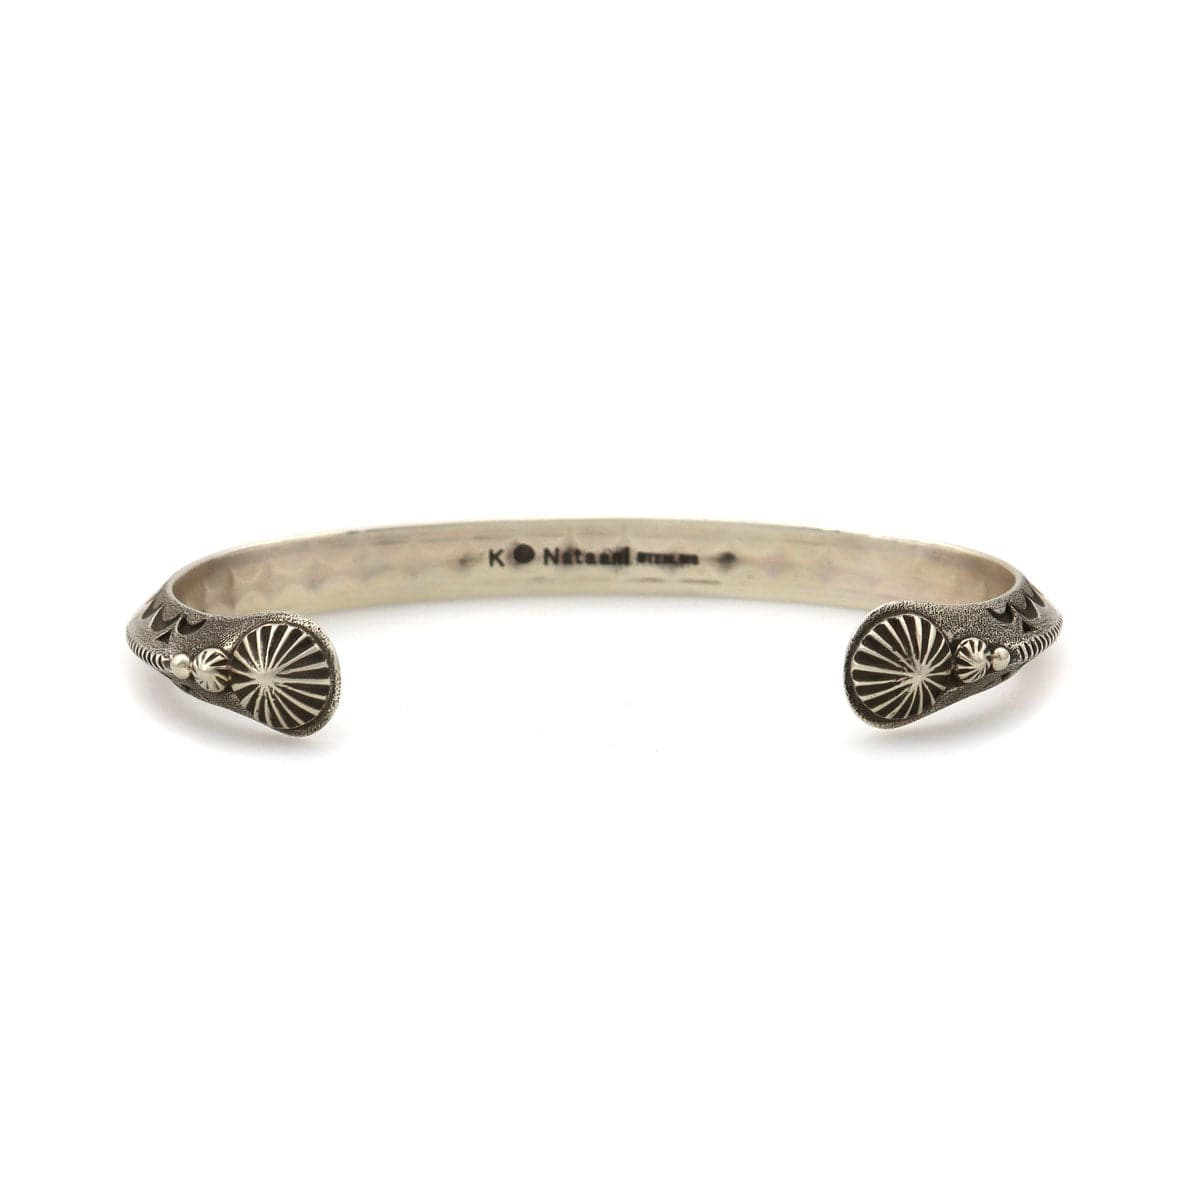 Kee (Karl) Nataani â€“ Navajo Sterling Silver Stamped Design Bracelet, Contemporary (J14184-007)2